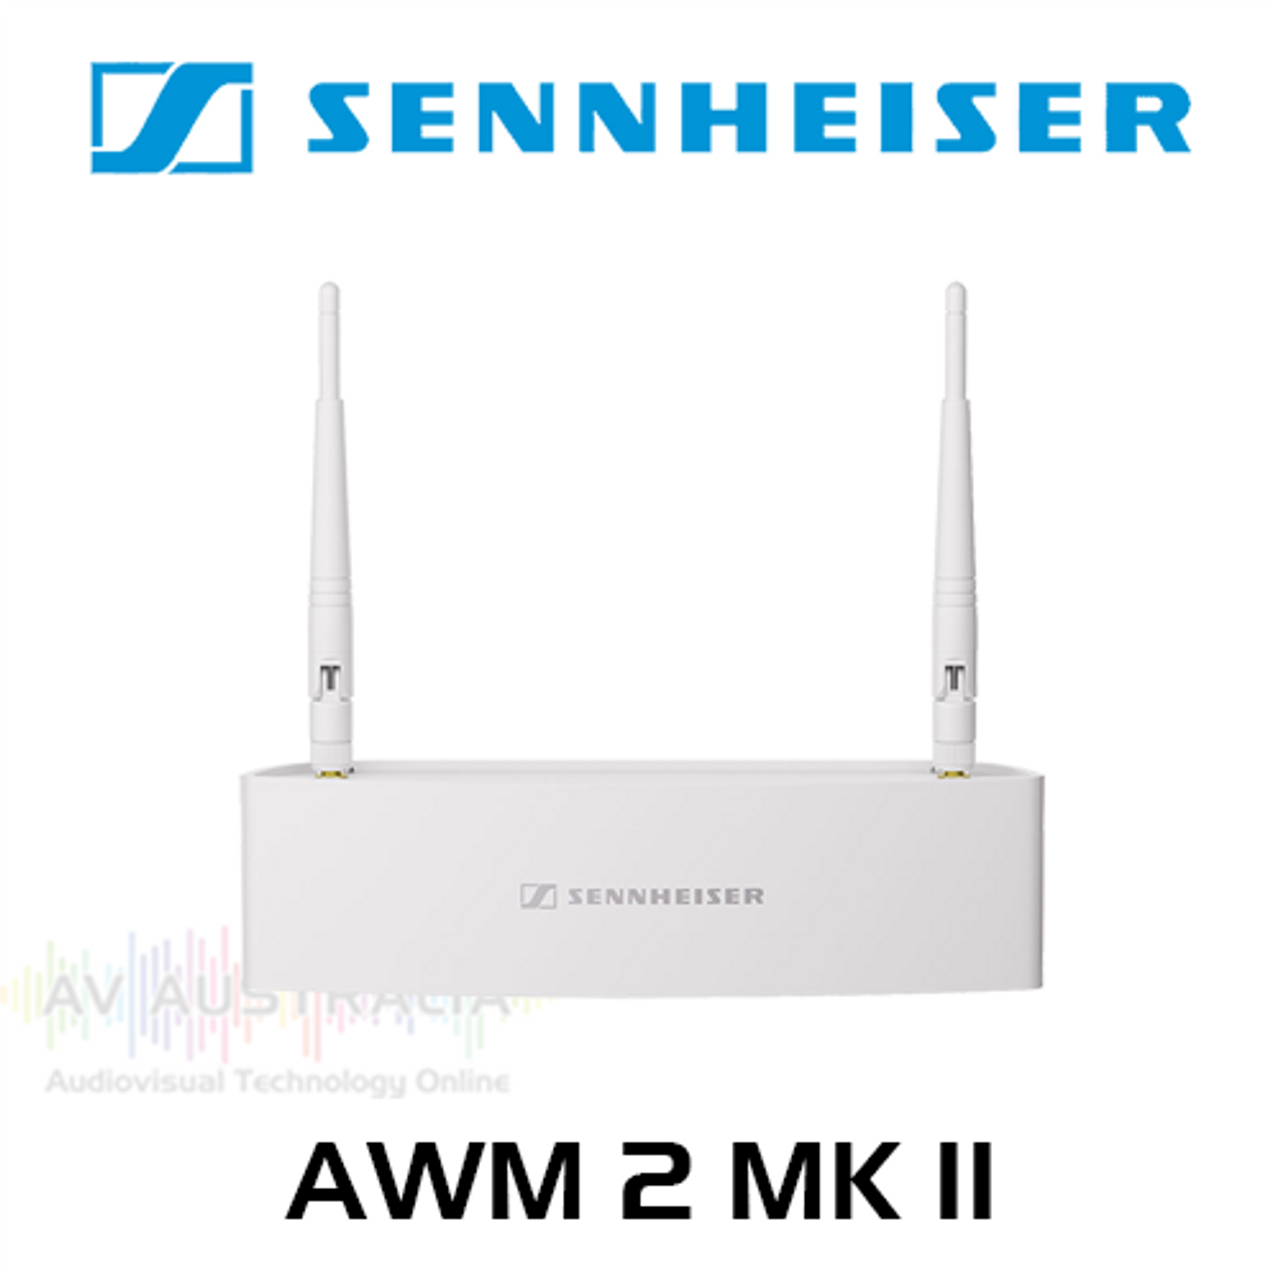 Sennheiser SpeechLine AWM 2 MK II Wall Mount Antenna